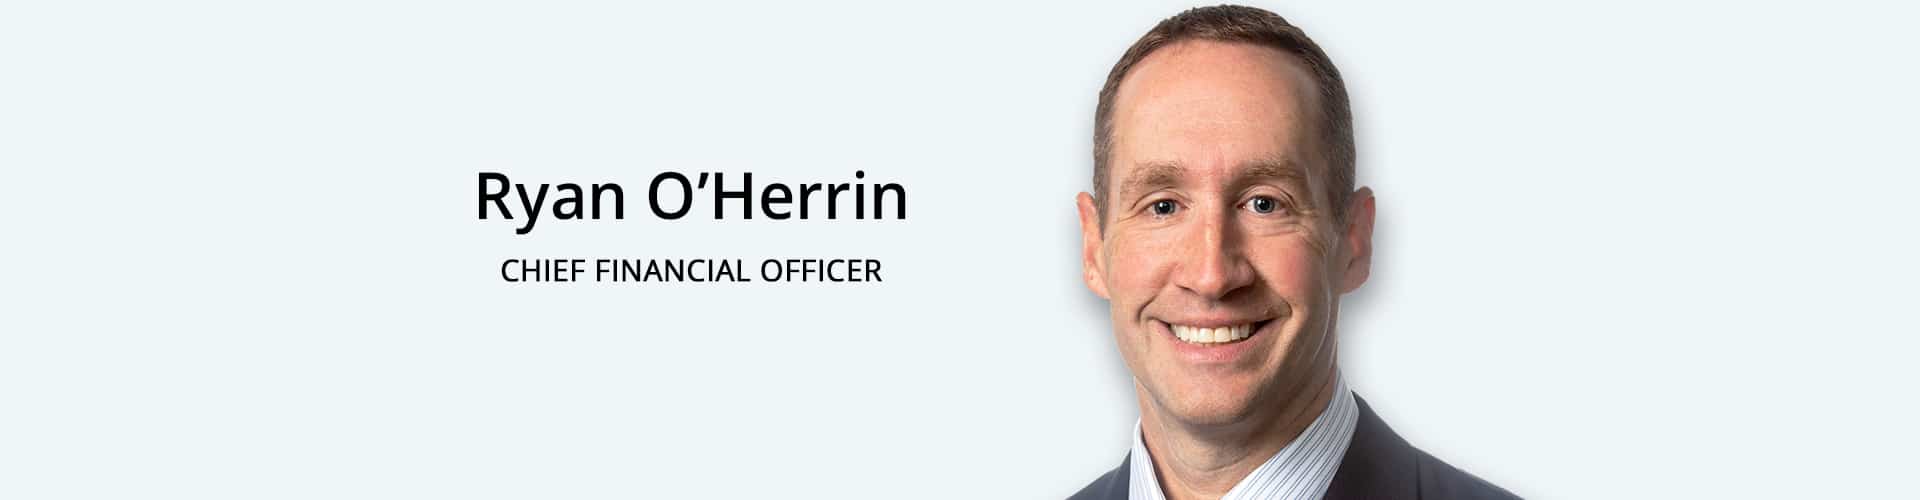 Ryan O’Herrin-Chief Financial Officer